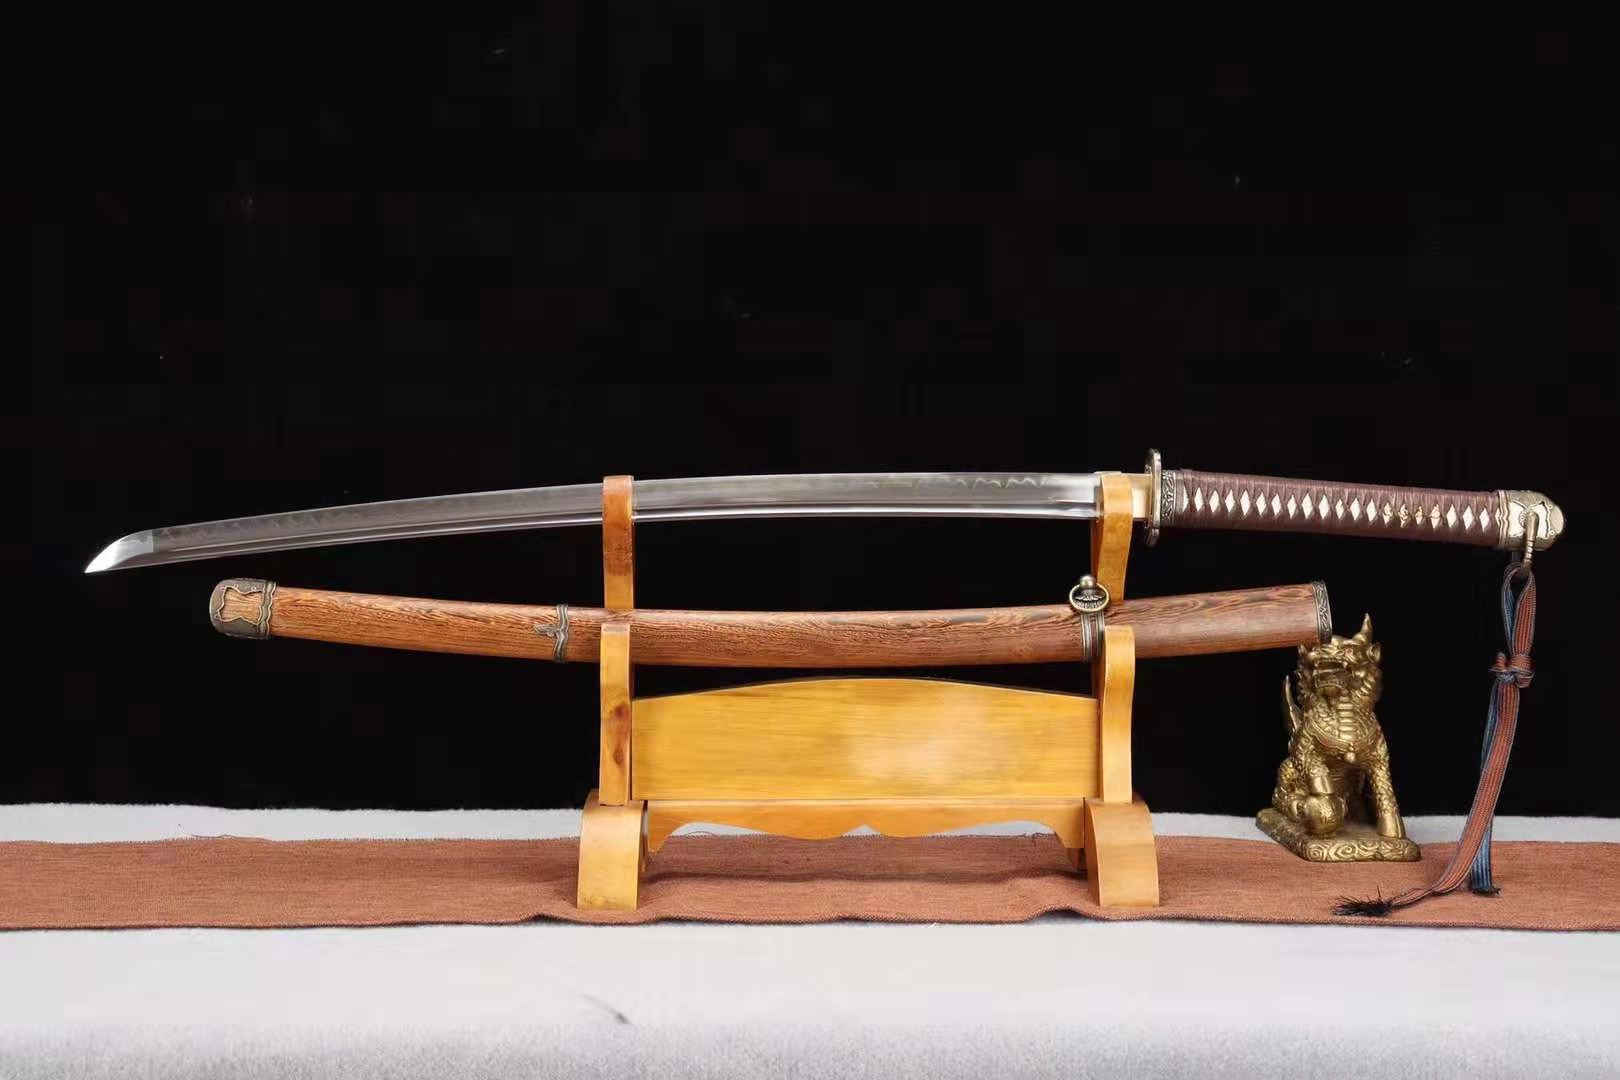 The Samurai Senso Handmade Katana T10 Steel-Romance of Men